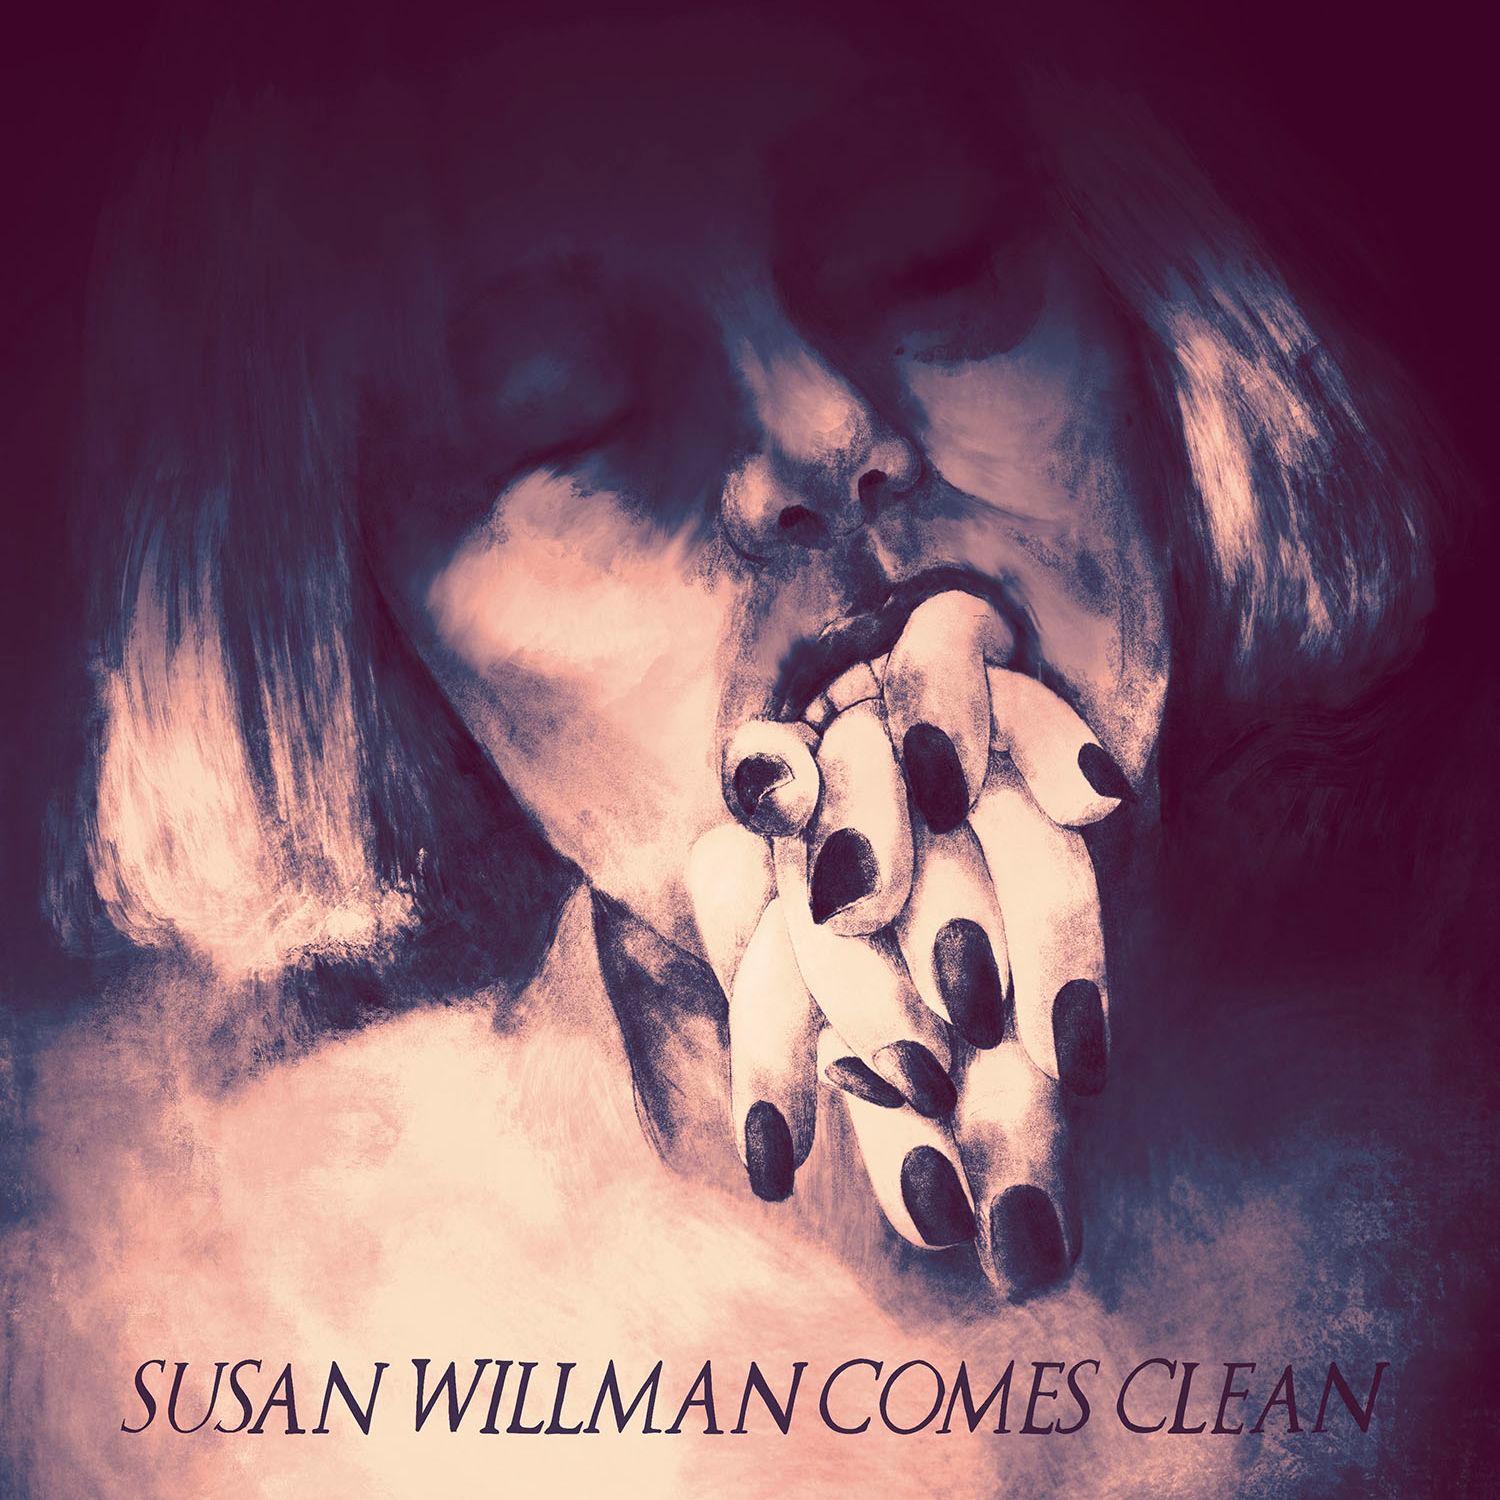 Thumbnail for "200 - Susan Willman Comes Clean".